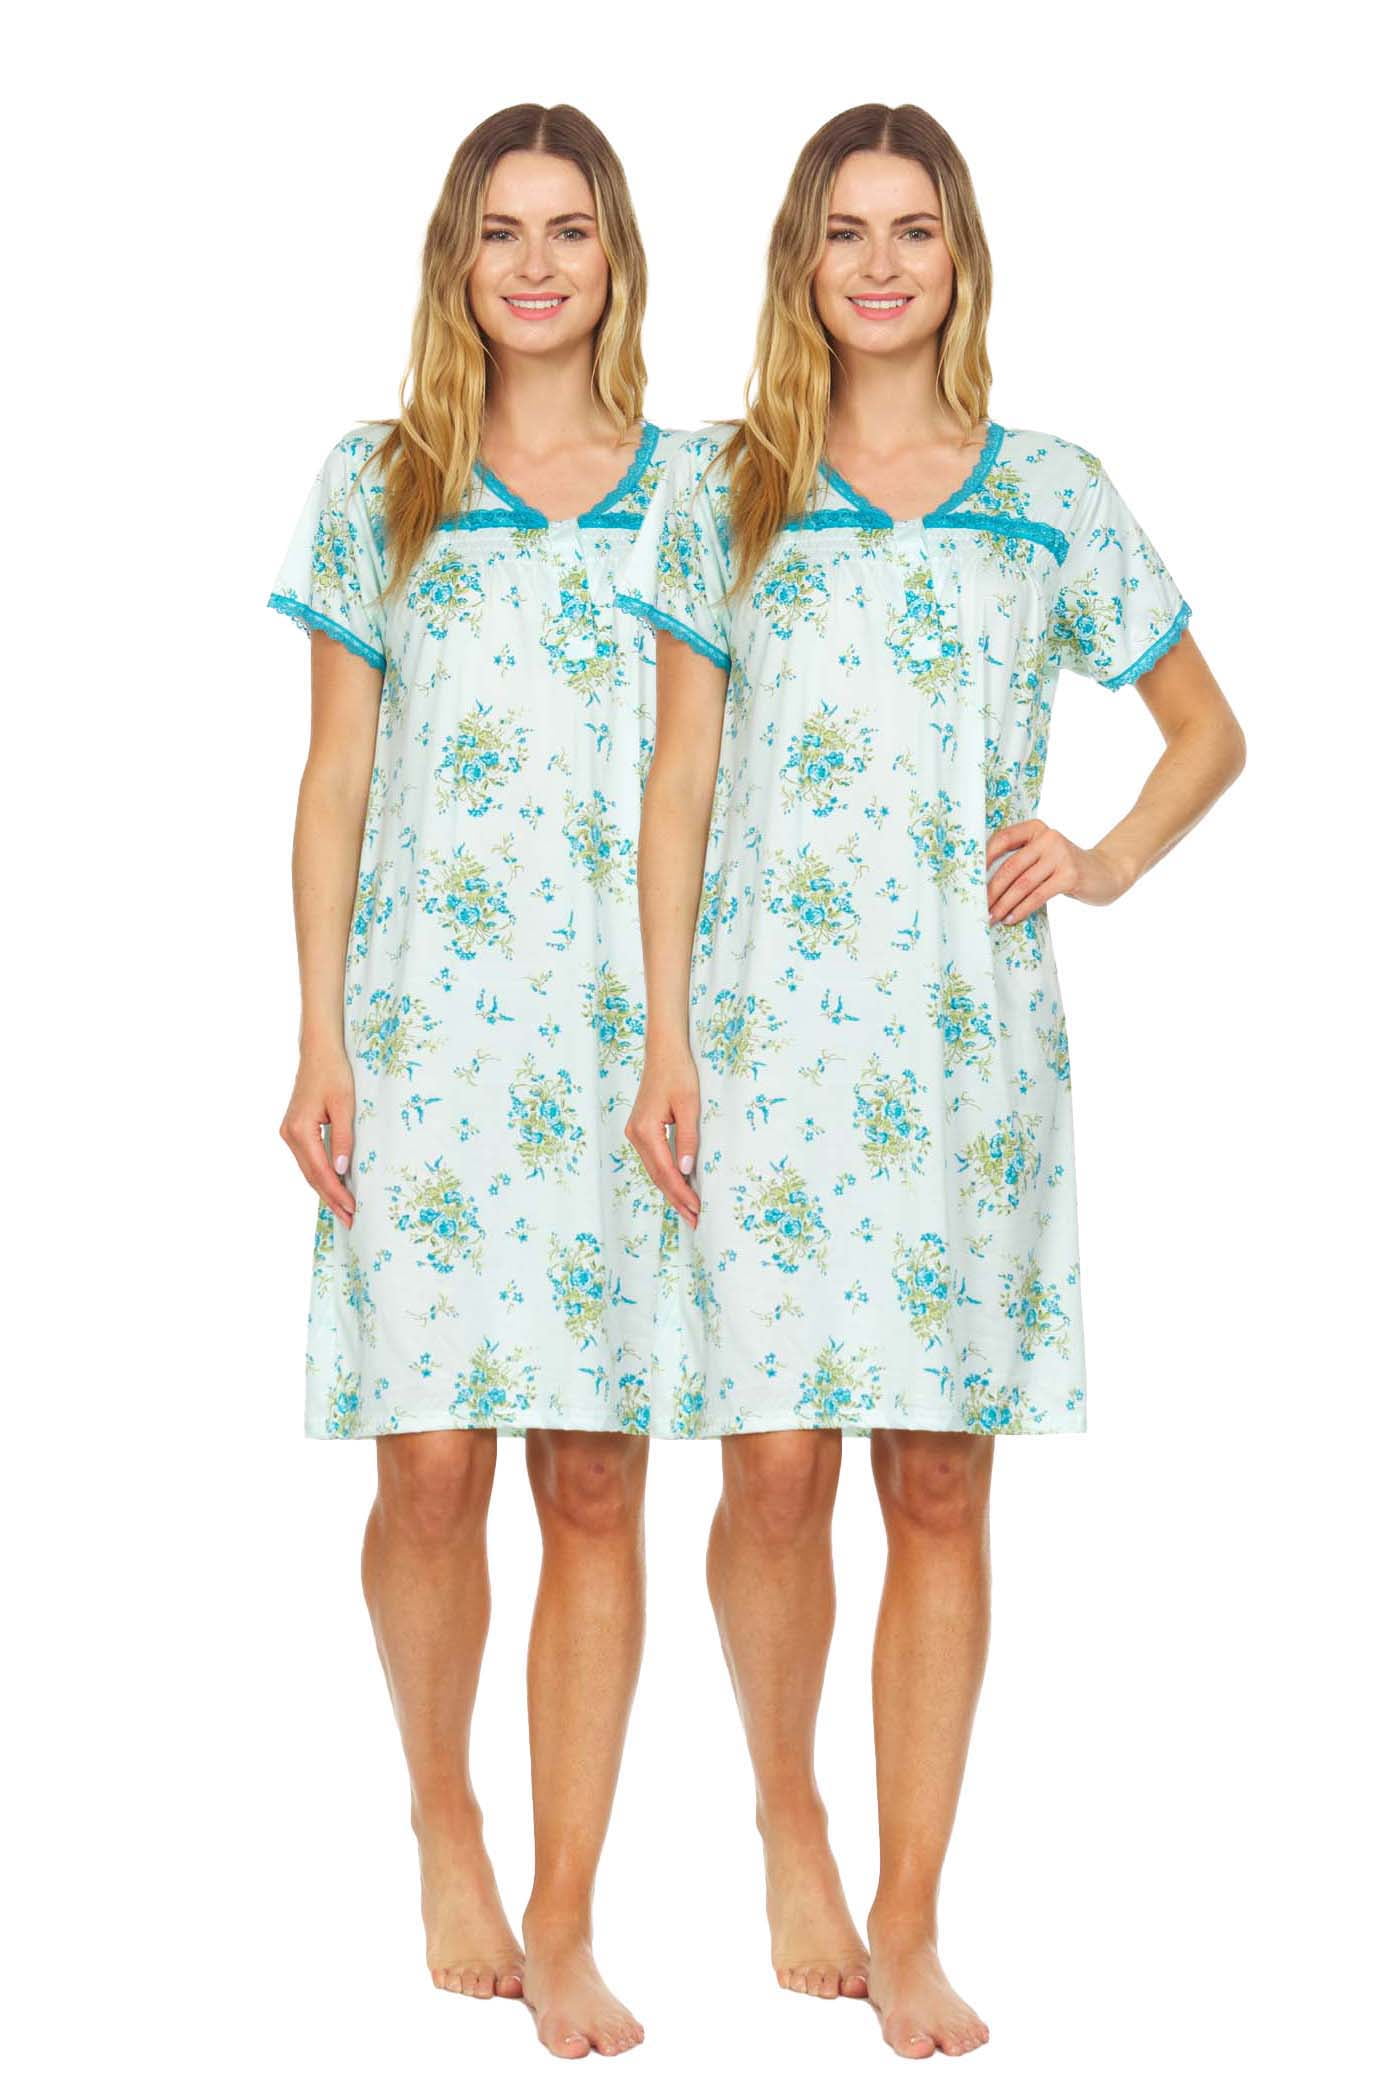 LA CERA Womens Cotton Nightgown Summer Nightgowns for Women 100% Cotton  Chemise - White - 1X